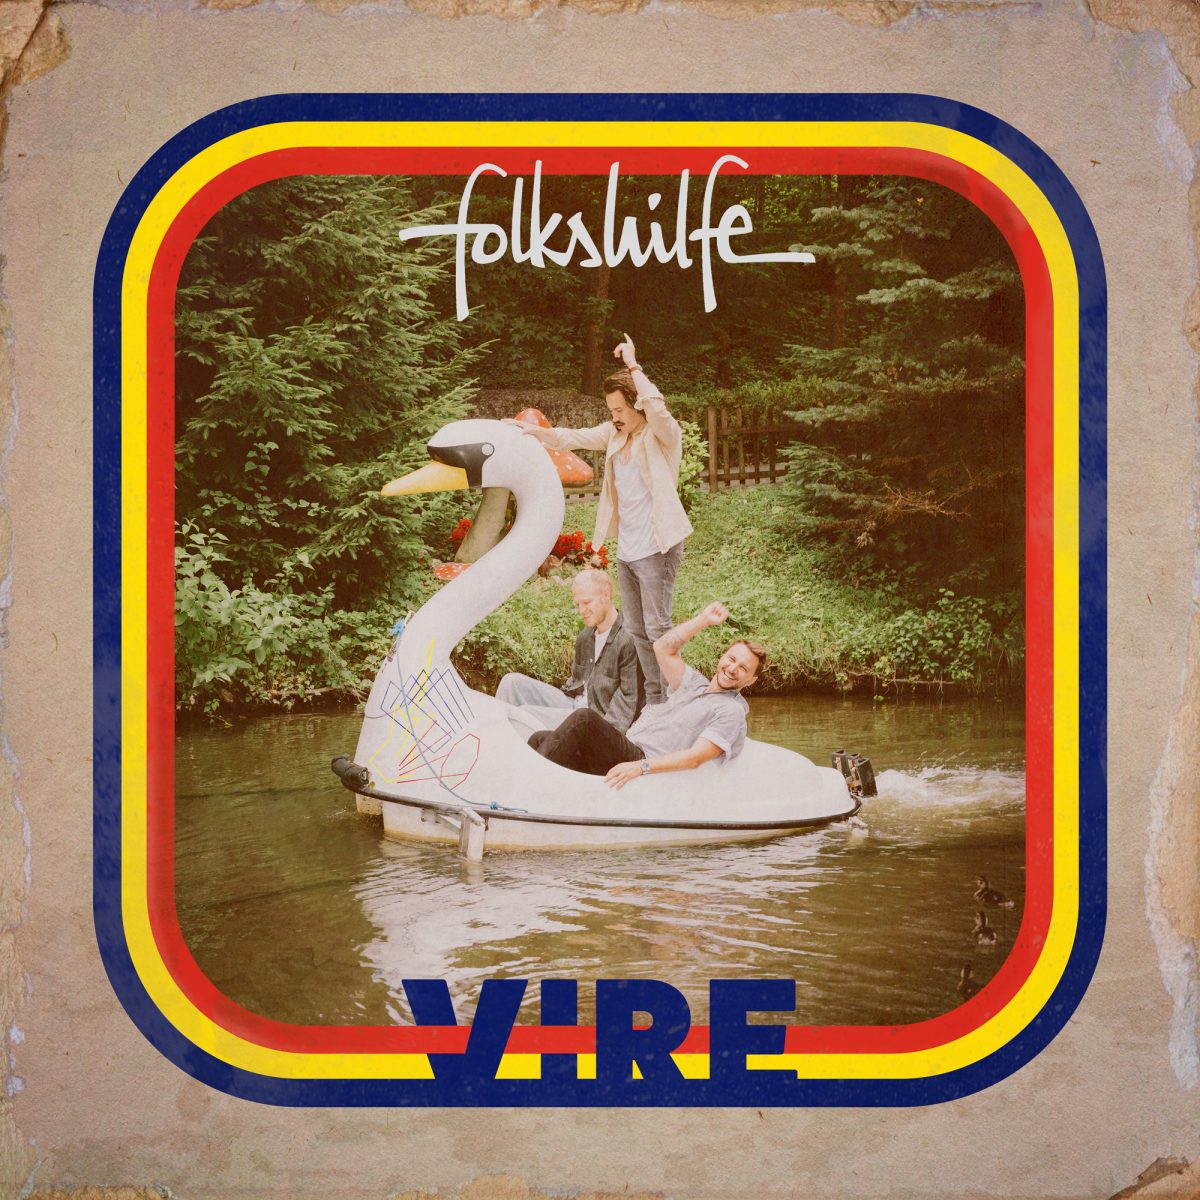 folkshilfe-vire-album-review